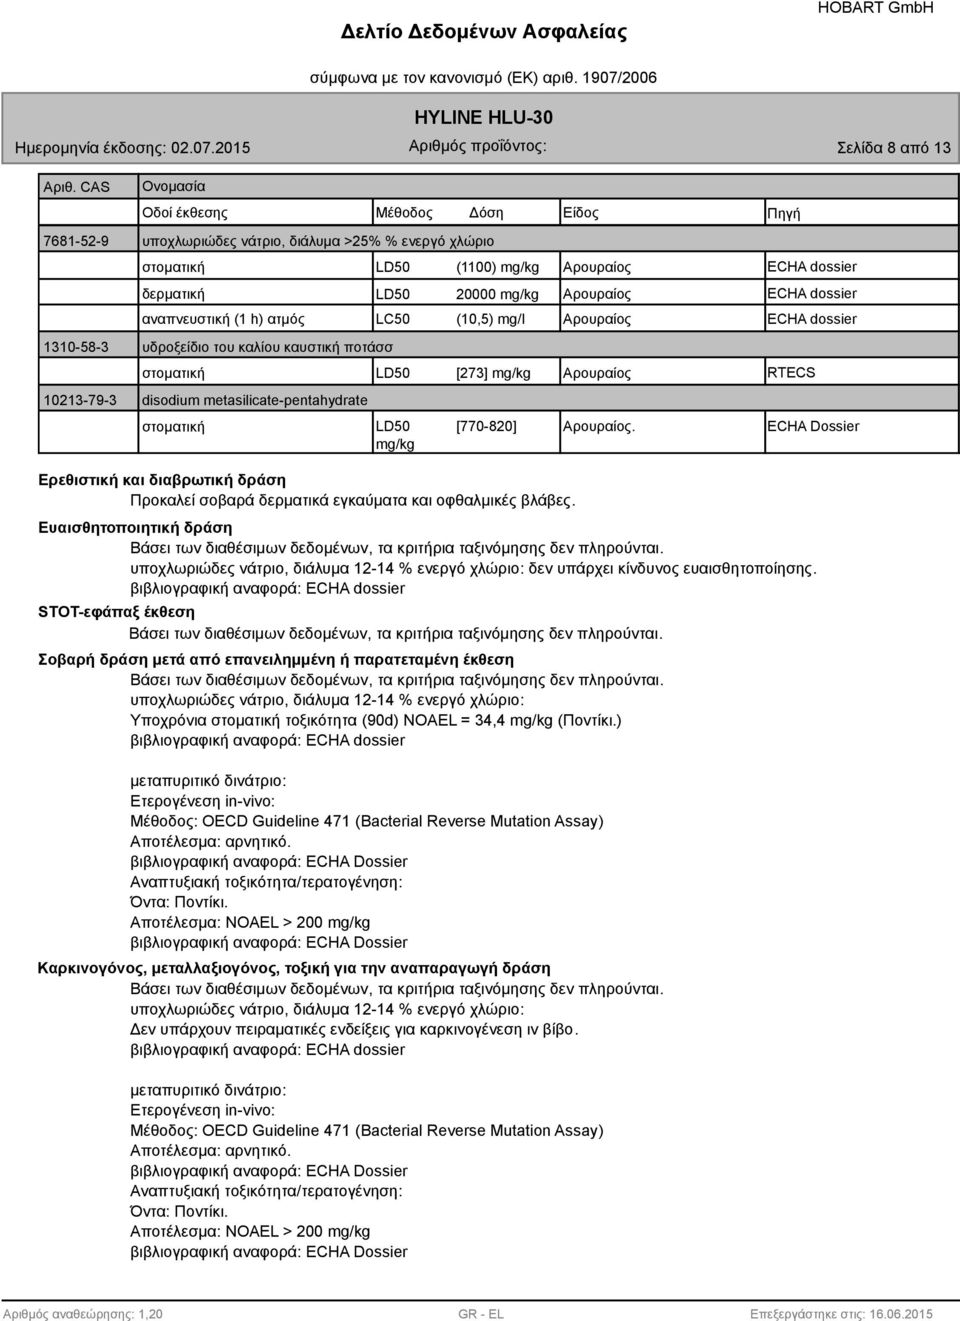 ECHA dossier αναπνευστική (1 h) ατμός LC50 (10,5) mg/l Αρουραίος ECHA dossier 1310-58-3 υδροξείδιο του καλίου καυστική ποτάσσ στοματική LD50 [273] mg/kg Αρουραίος RTECS 10213-79-3 disodium